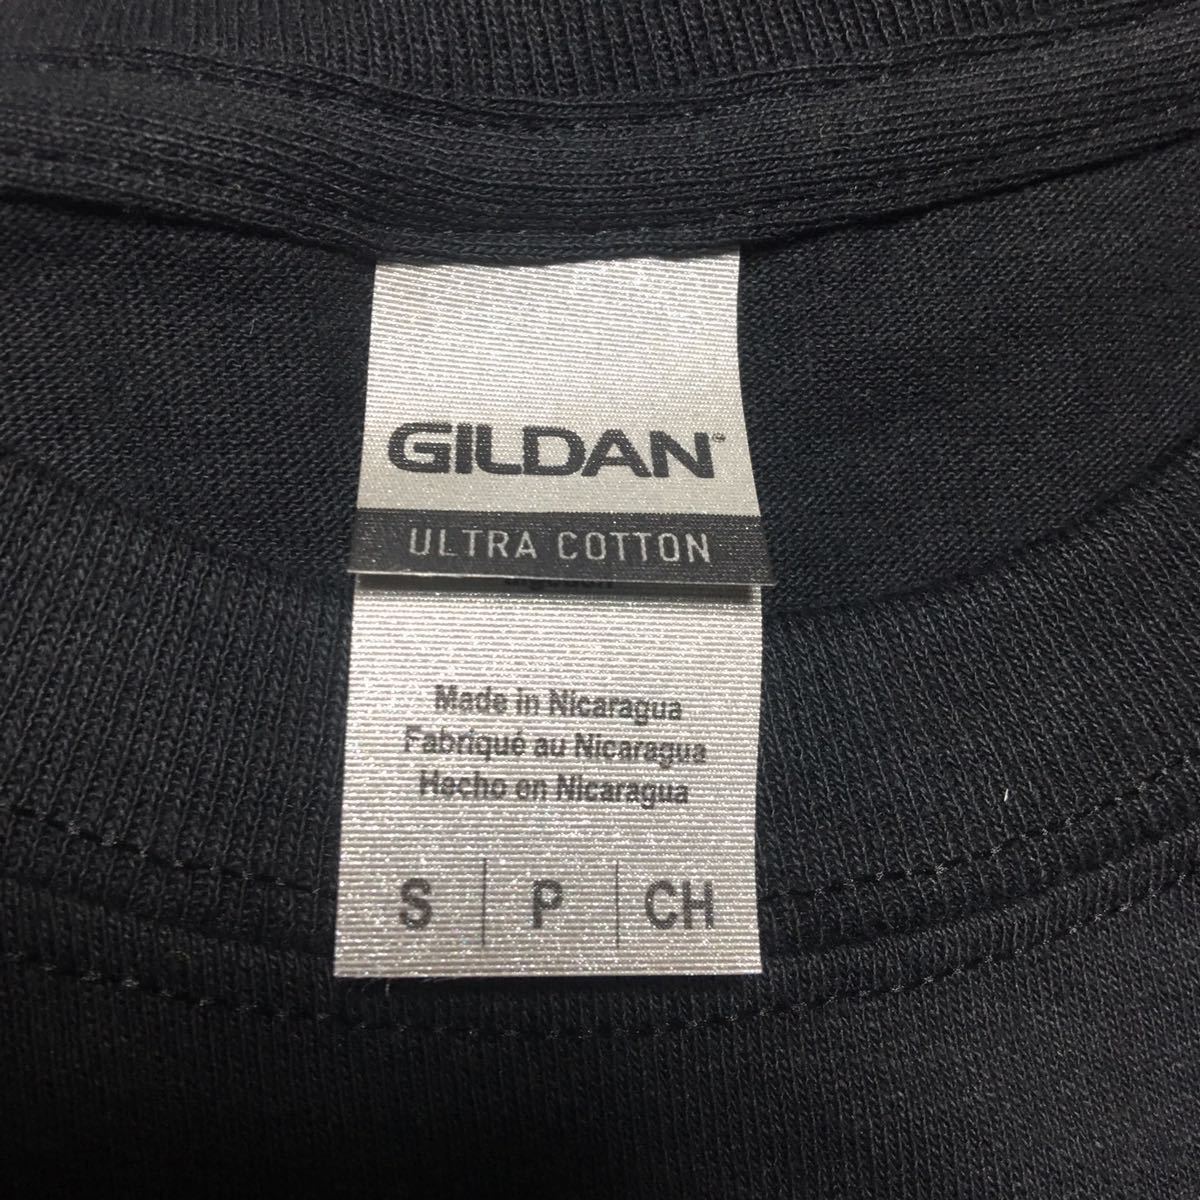 GILDAN ブラック Sサイズ 黒 半袖無地Tシャツ ポケット付き 6.0oz ギルダン☆_画像2